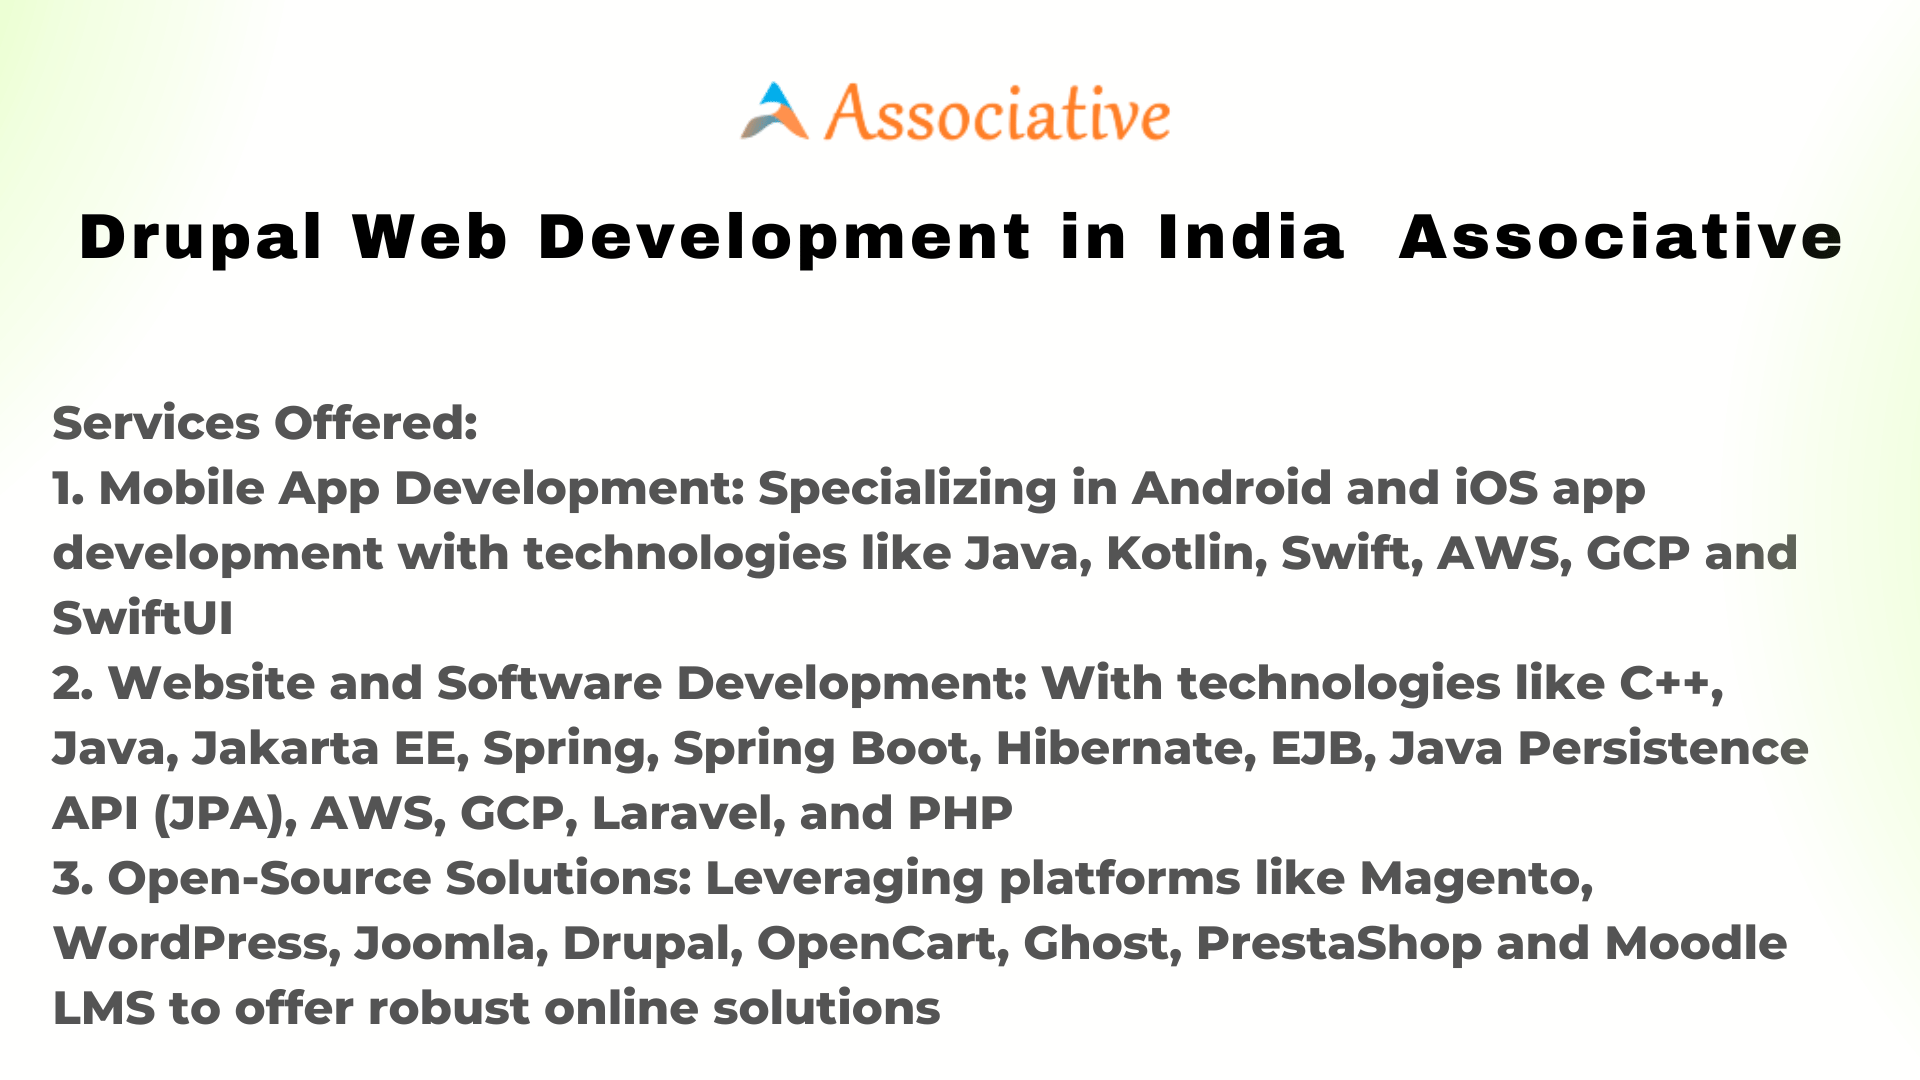 Drupal Web Development in India Associative